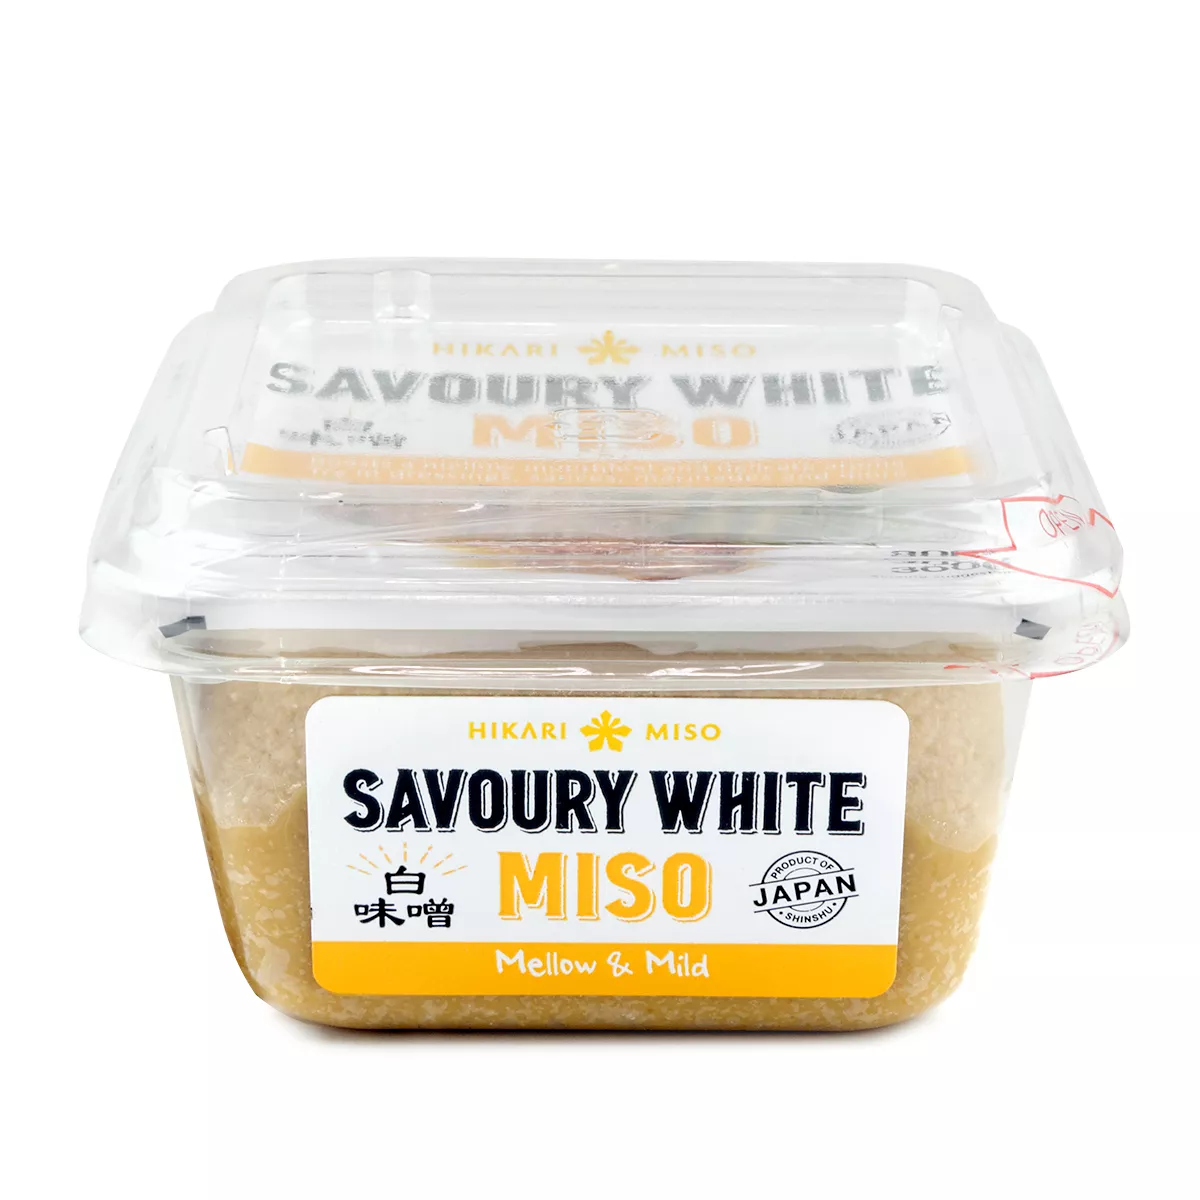 Pasta miso alba (Savoury White Miso) HIKARI 300g, [],asianfood.ro